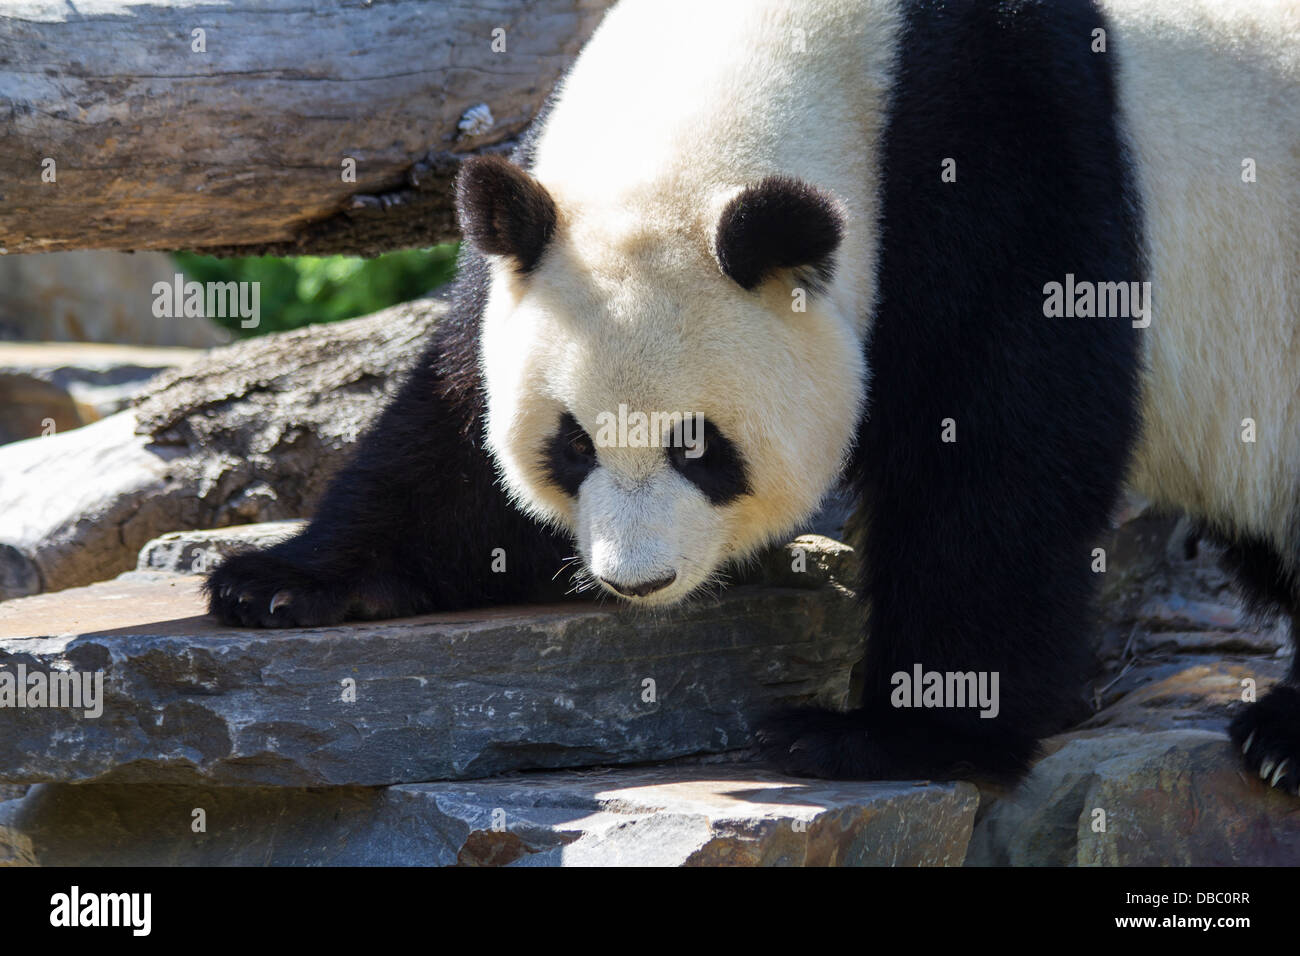 Black and white panda at the Adelaide Zoo in Australia Stock Photo